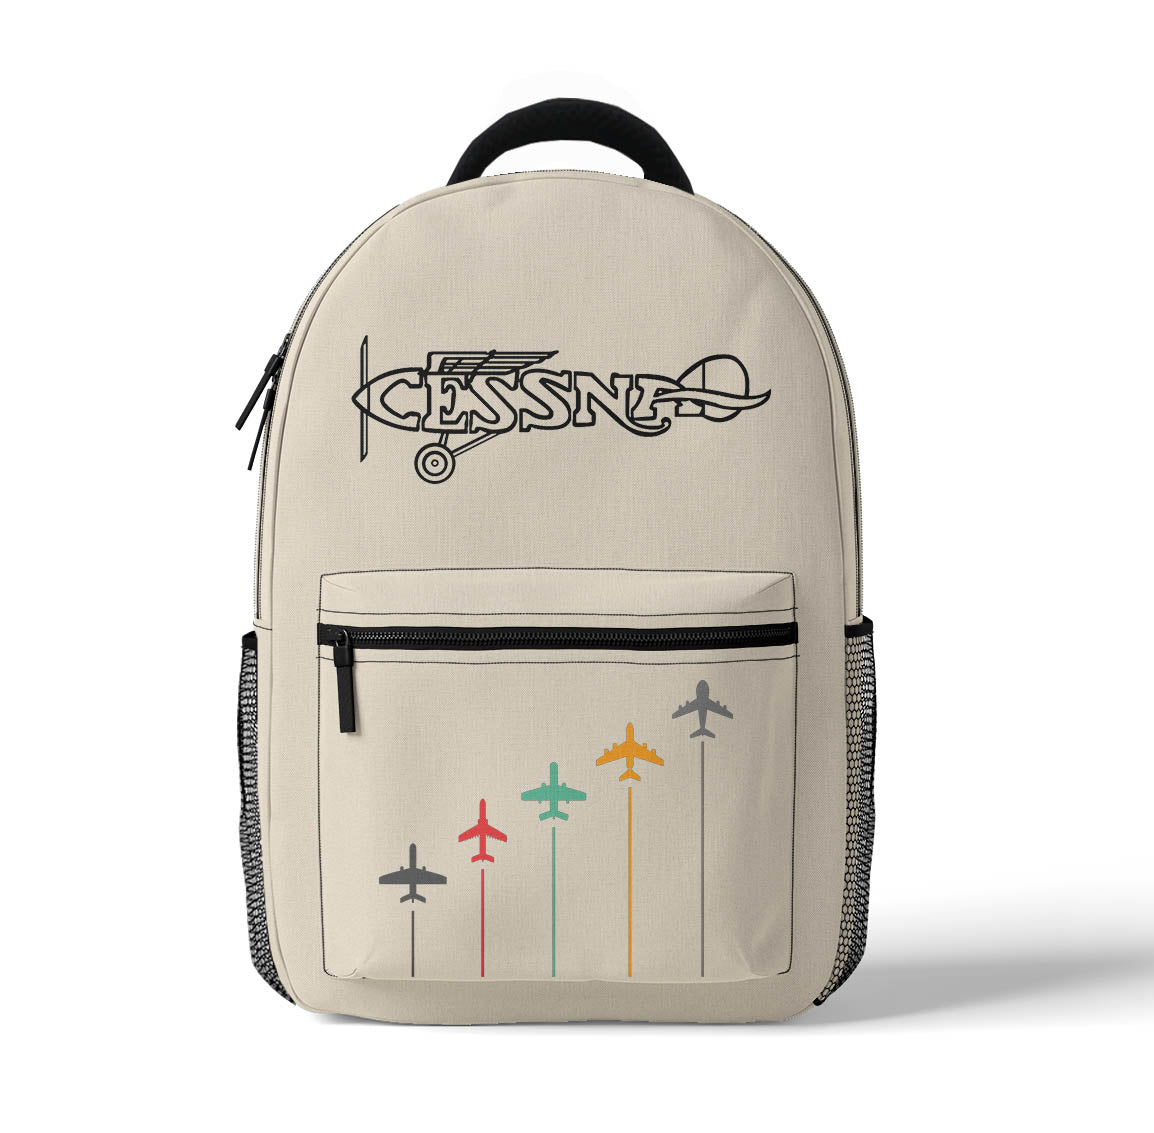 Special Cessna Text Designed 3D Backpacks